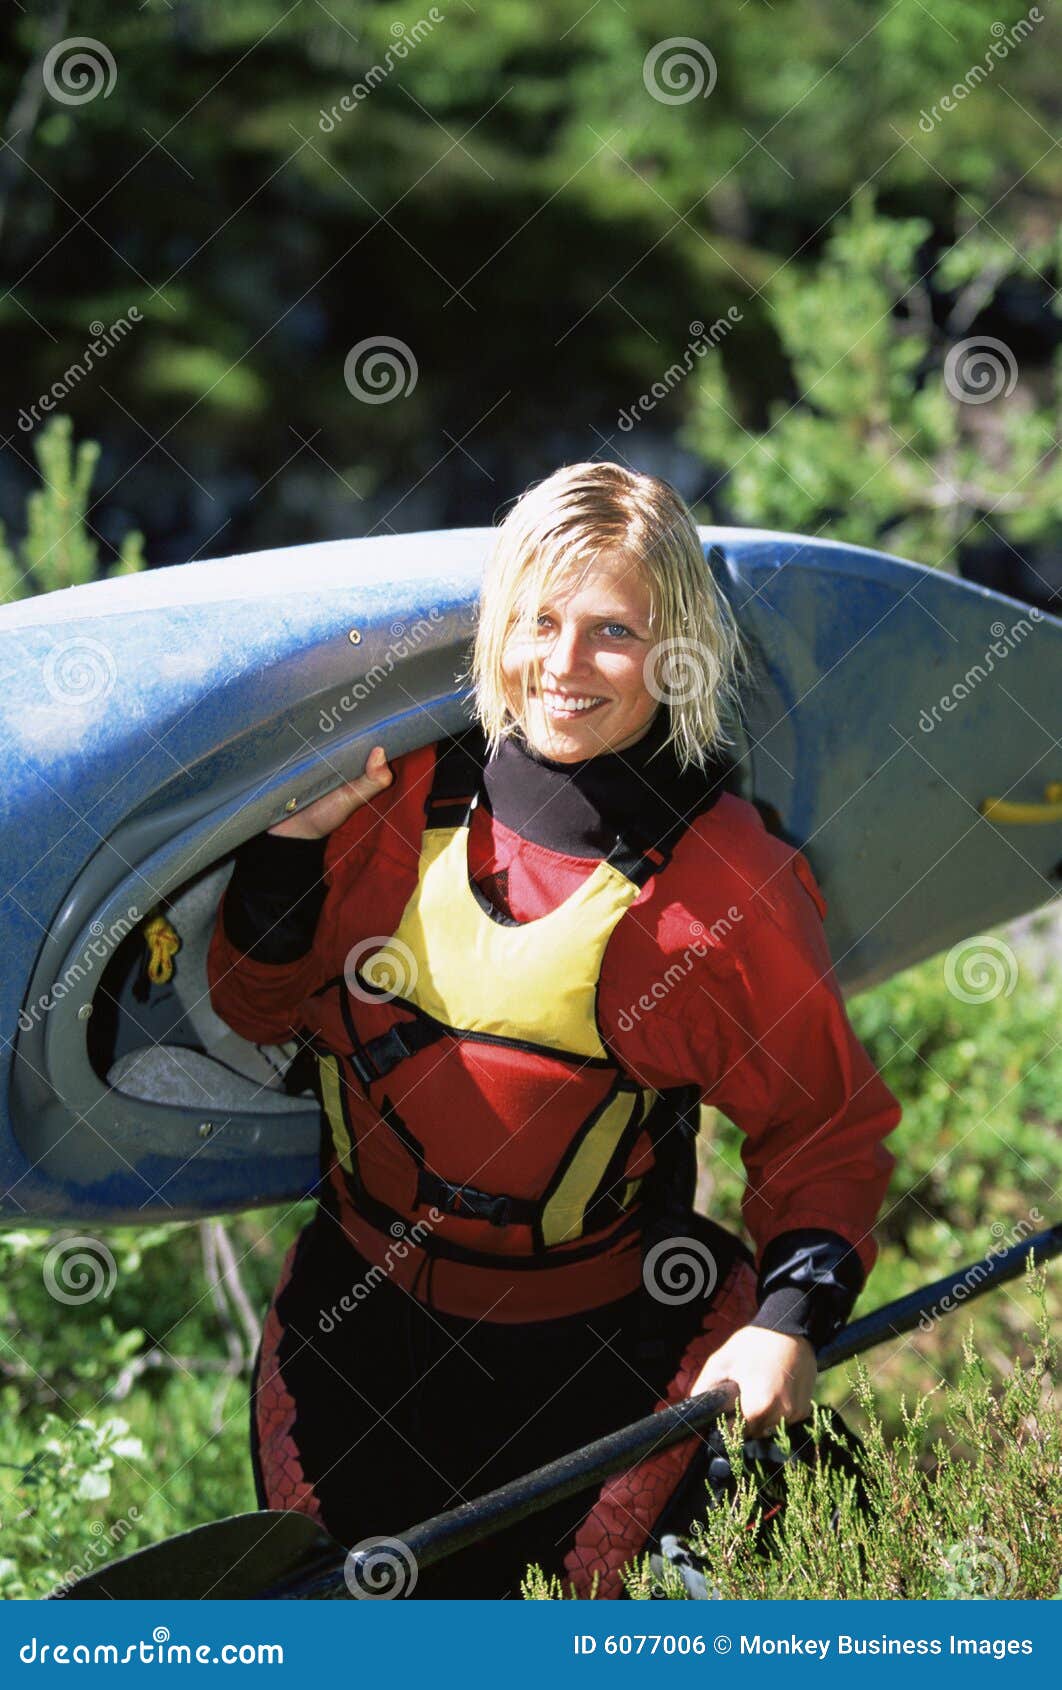 young woman carrying kayak royalty free stock image